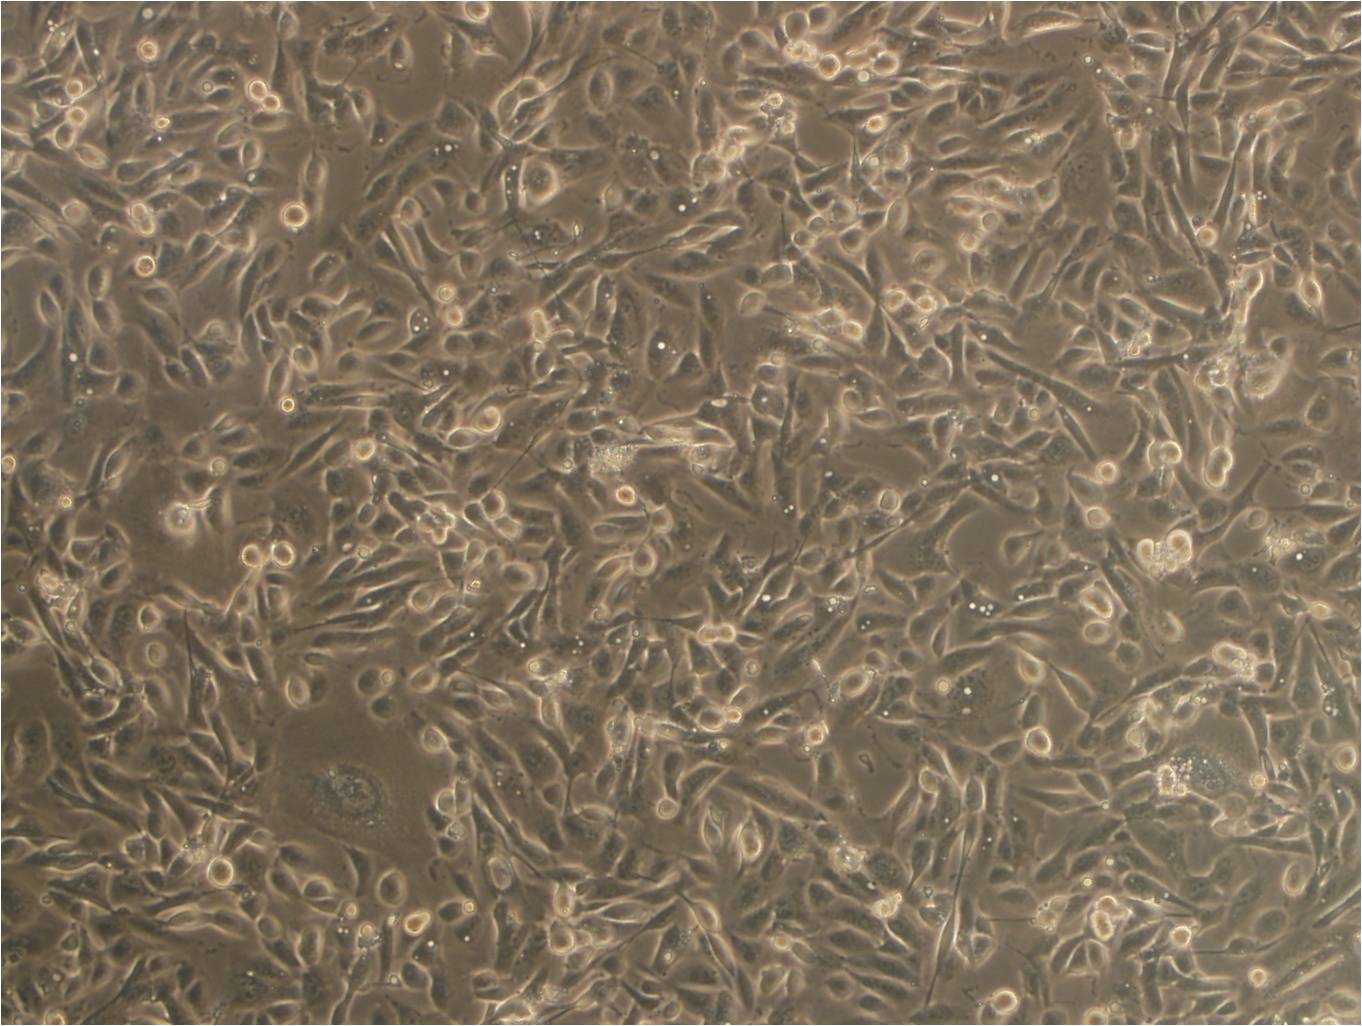 EOMA epithelioid cells小鼠血管内皮瘤细胞系